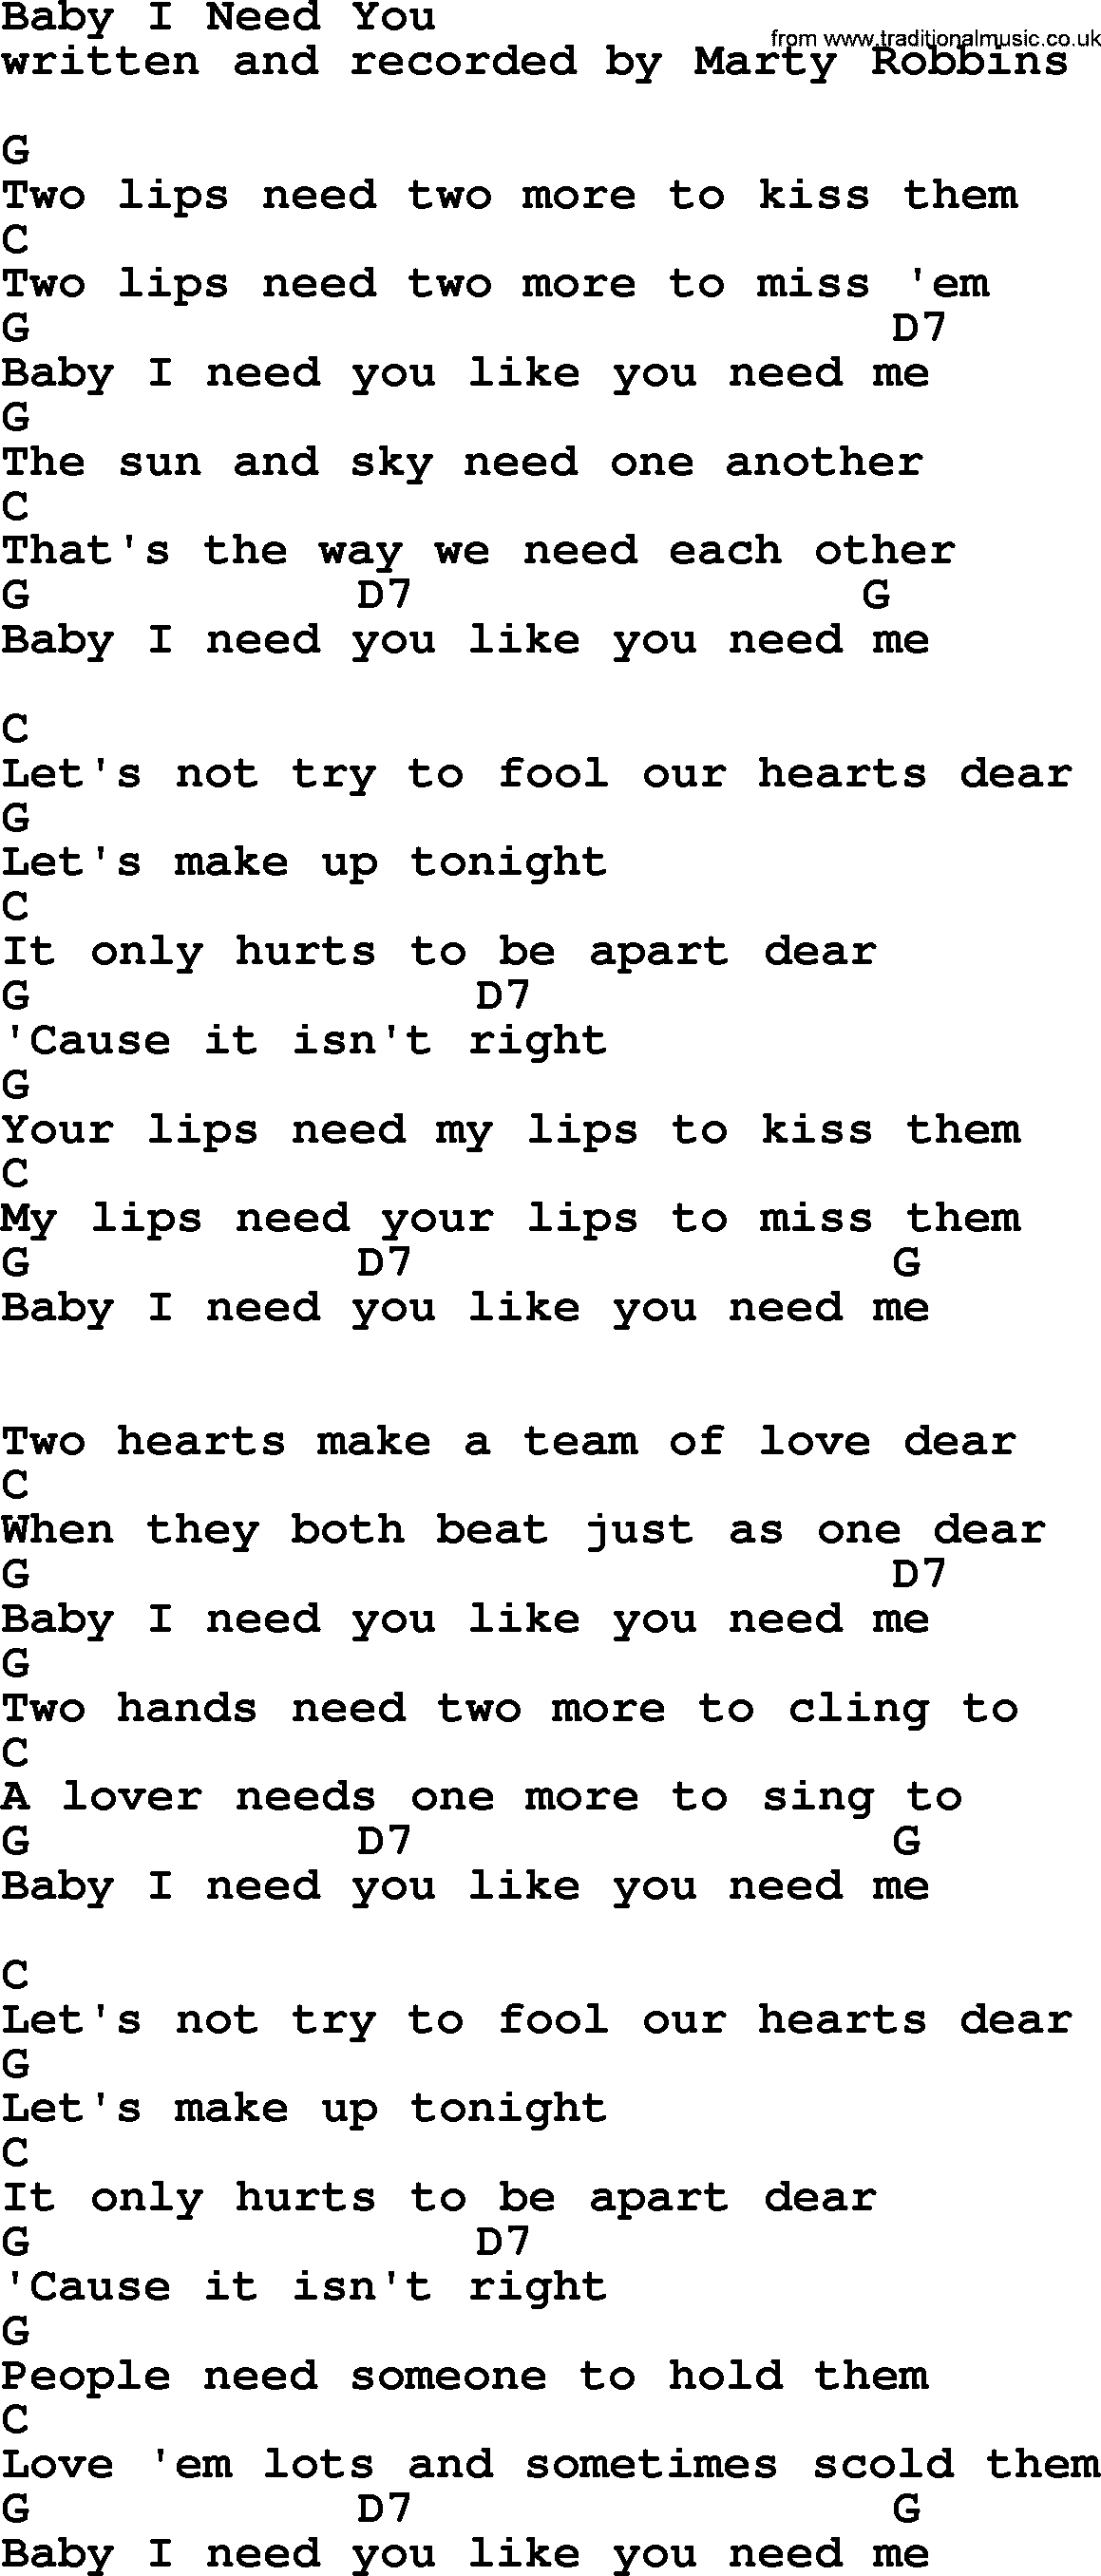 Marty Robbins song: Baby I Need You, lyrics and chords